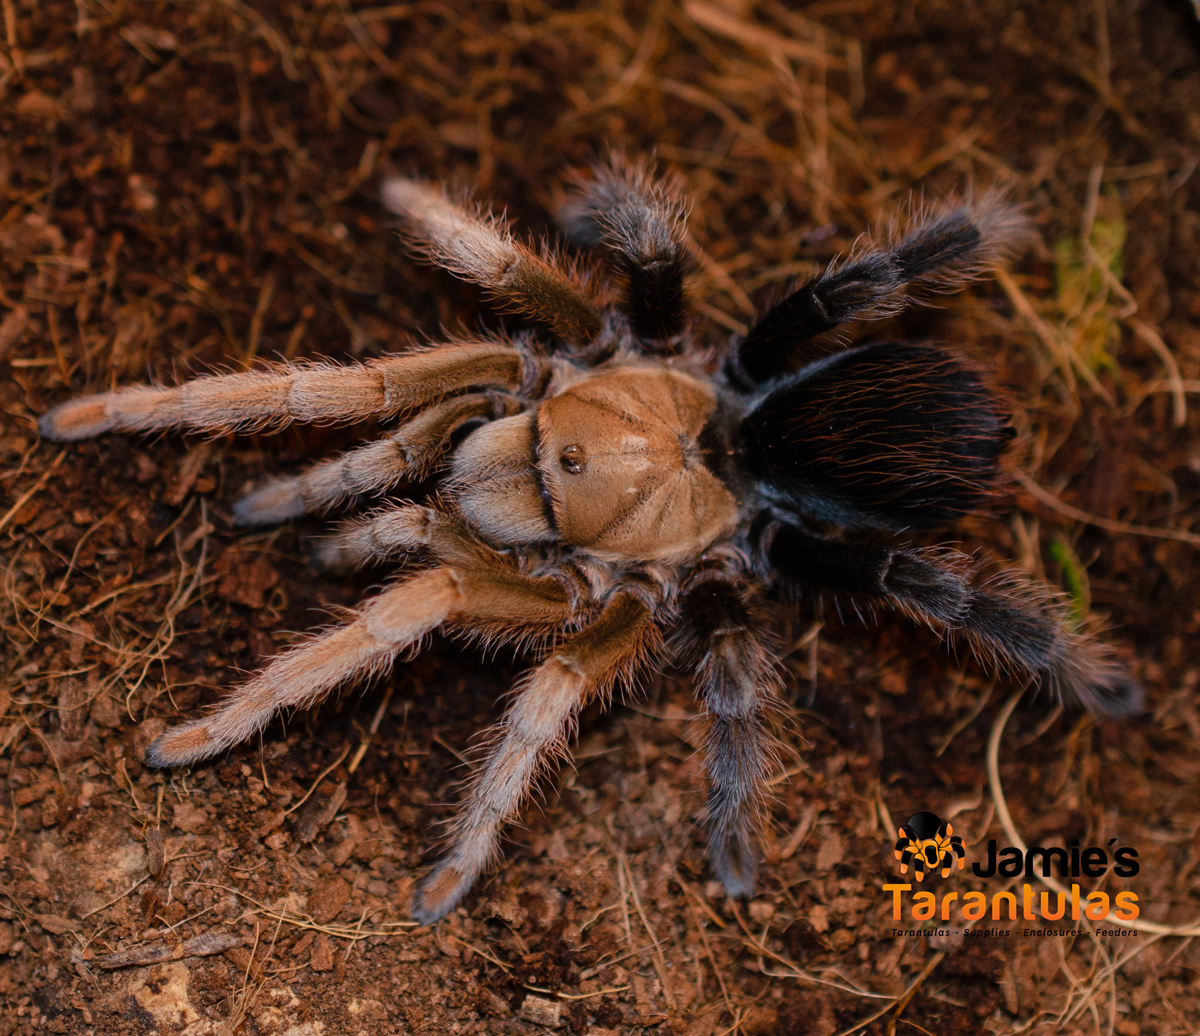 Where should I buy my tarantula supplies from? Enclosures, hides